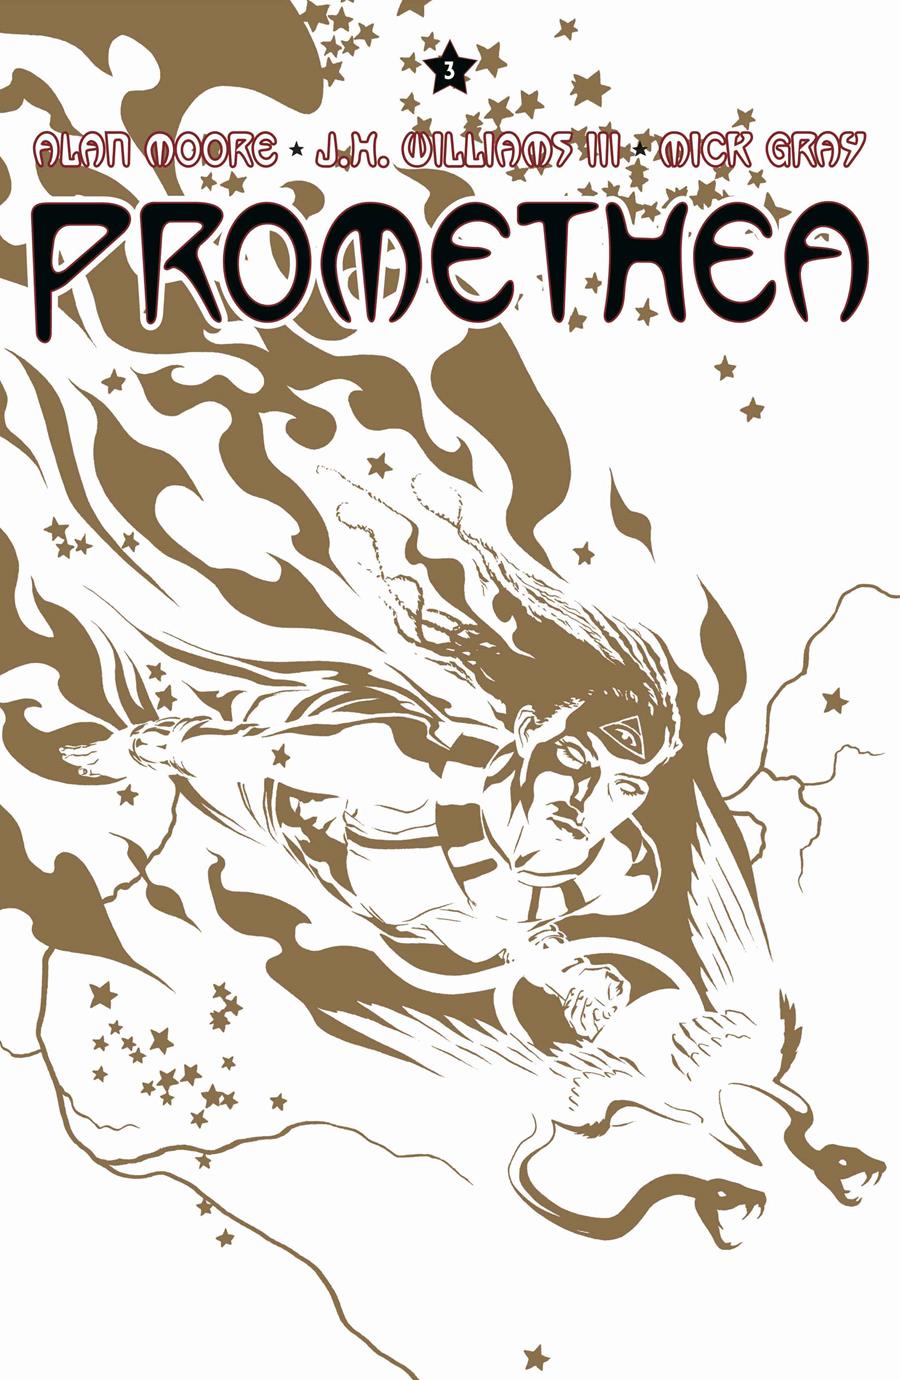 Promethea (Edición Deluxe) vol. 03 de 3 | N1021-ECC31 | Alan Moore / J.H. Williams III | Terra de Còmic - Tu tienda de cómics online especializada en cómics, manga y merchandising